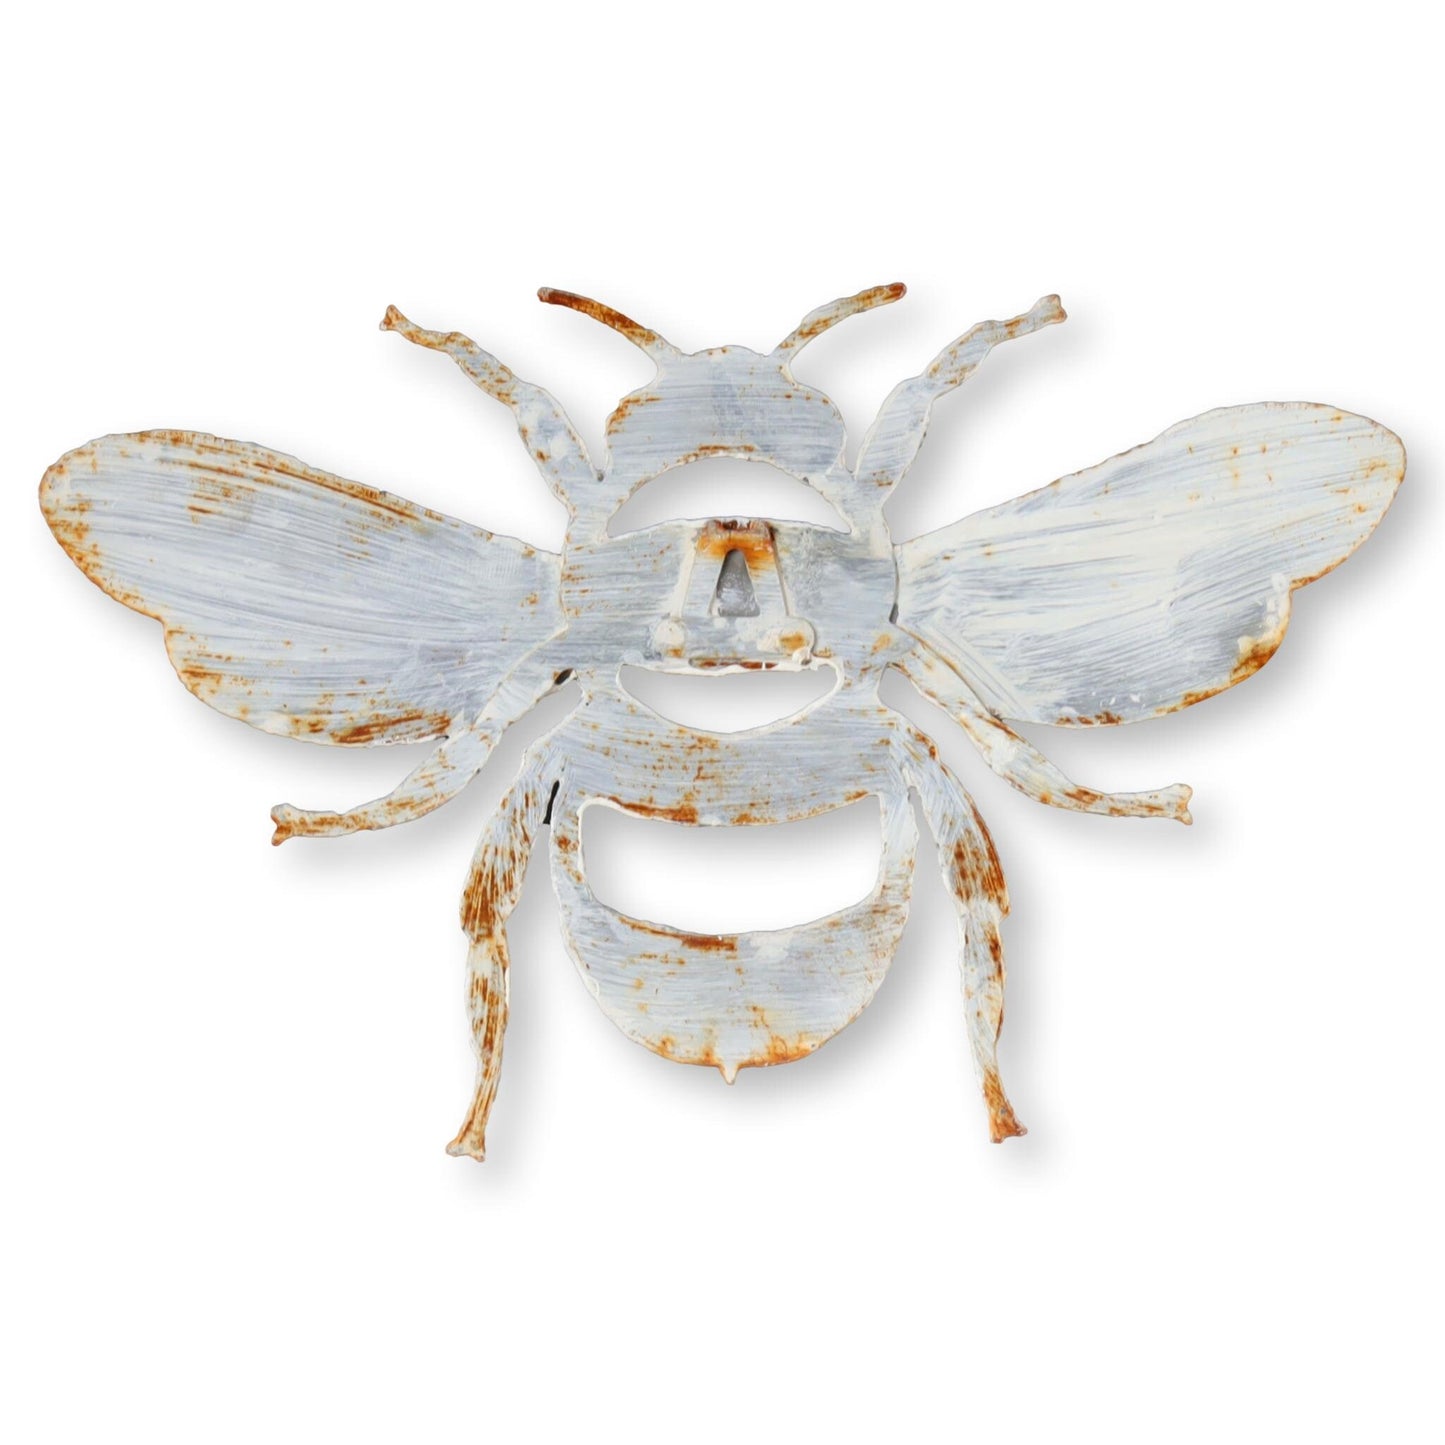 English Salvaged Metal Bumble Bee